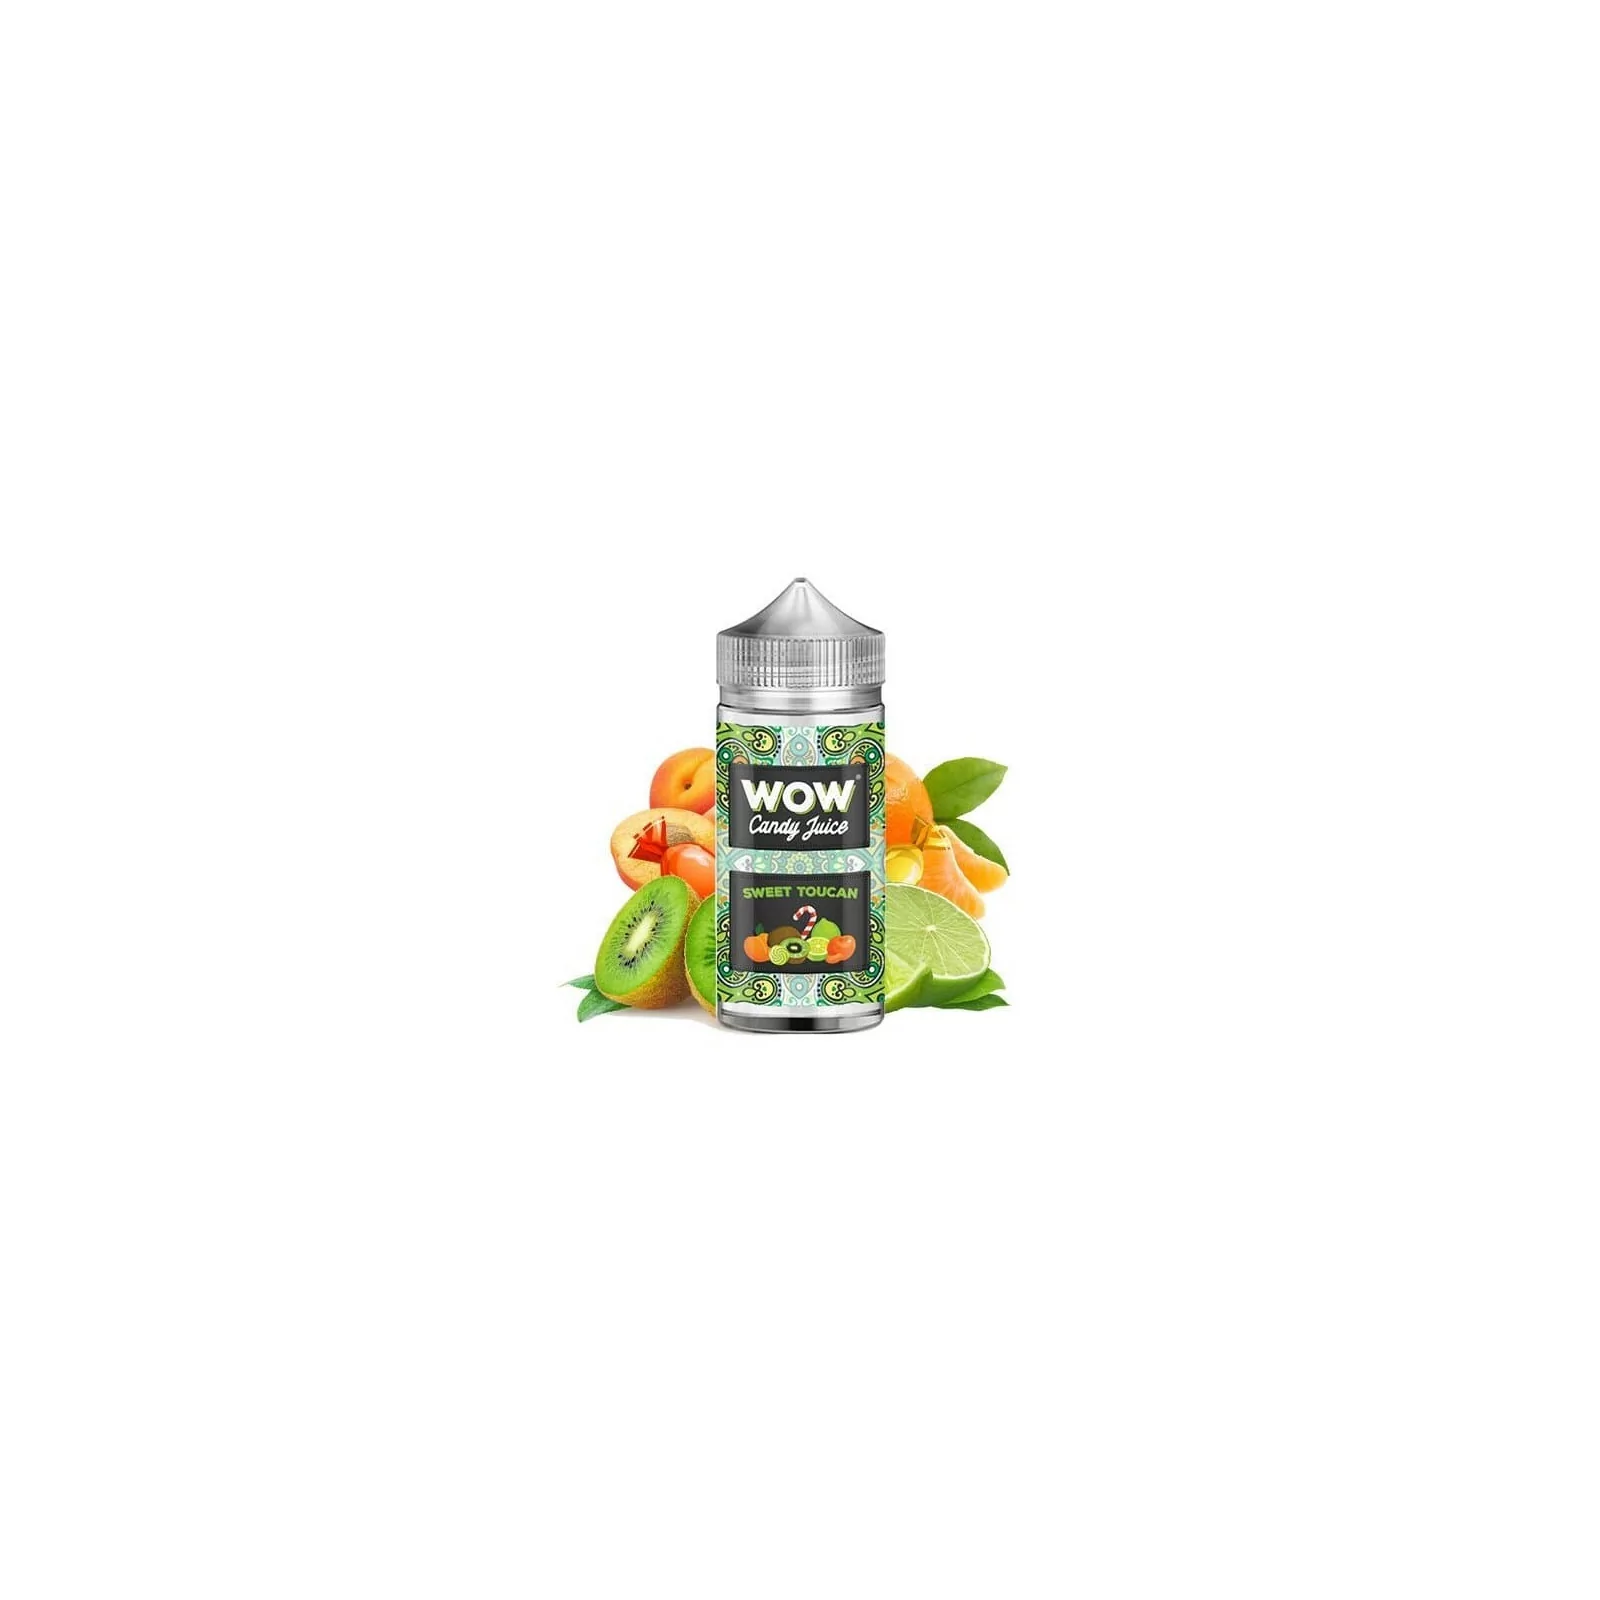 Sweet Toucan 100ml - WOW Candy Juice